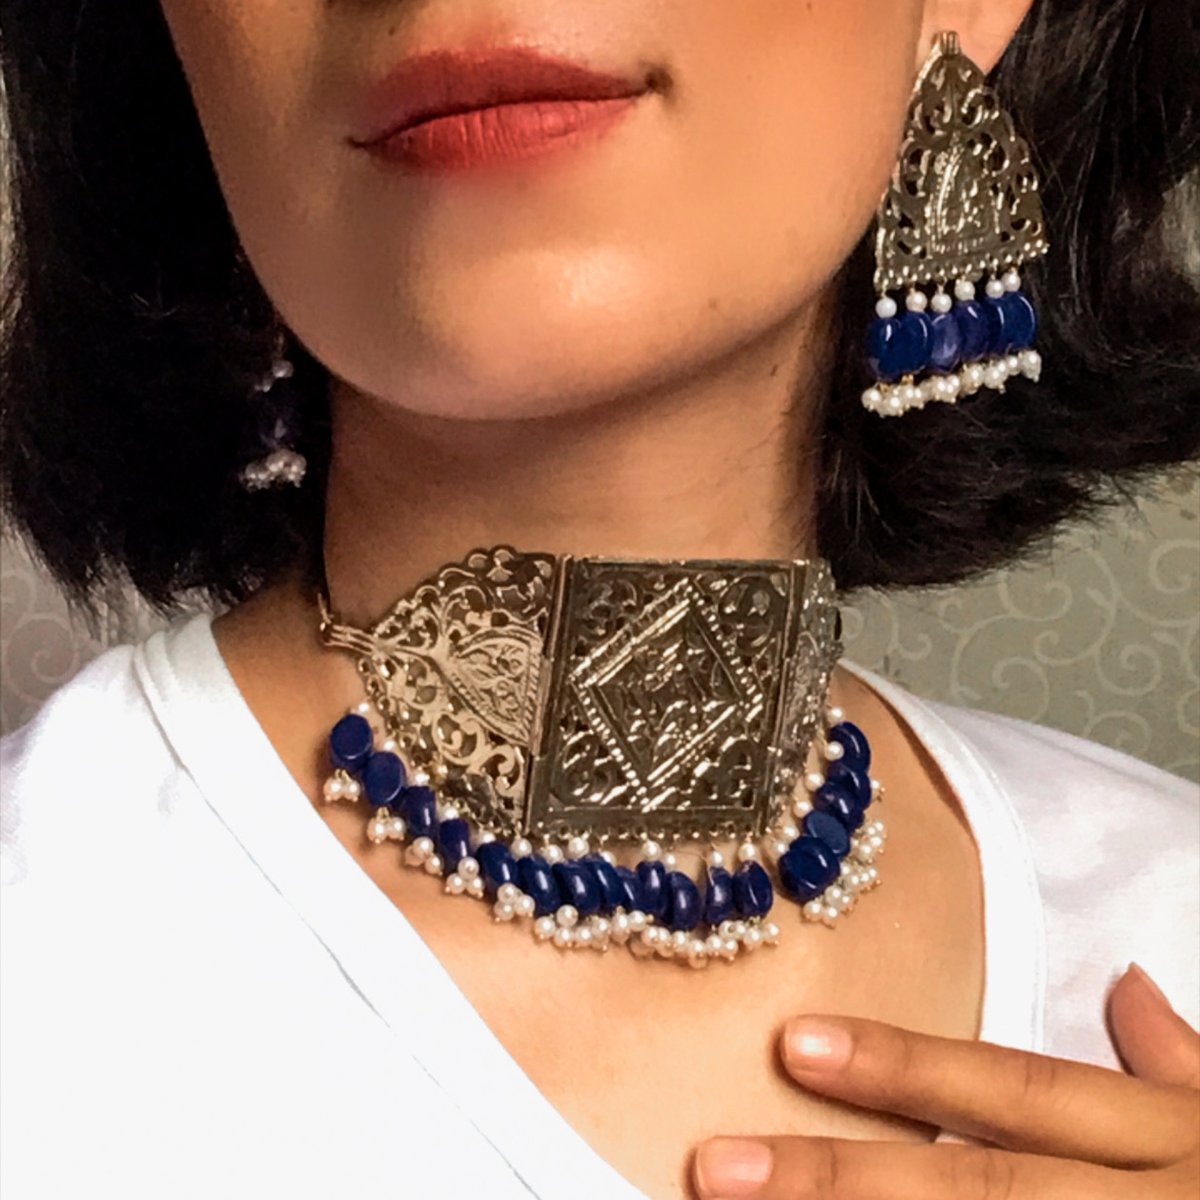 Bohemian Tribal Amulet Cum Choker With Earrings. 

Shop Now:
buff.ly/3F6jaz4

#tribaljewelry #ethnic #jisoo #jeno #ethnicjewelry #beads #FLOWER #necklace #necklaceoftheday #necklaceshop #ItsReneBaeDay #jewerly #jewerlydesign #glassstones #MEin2Days #beadednecklace